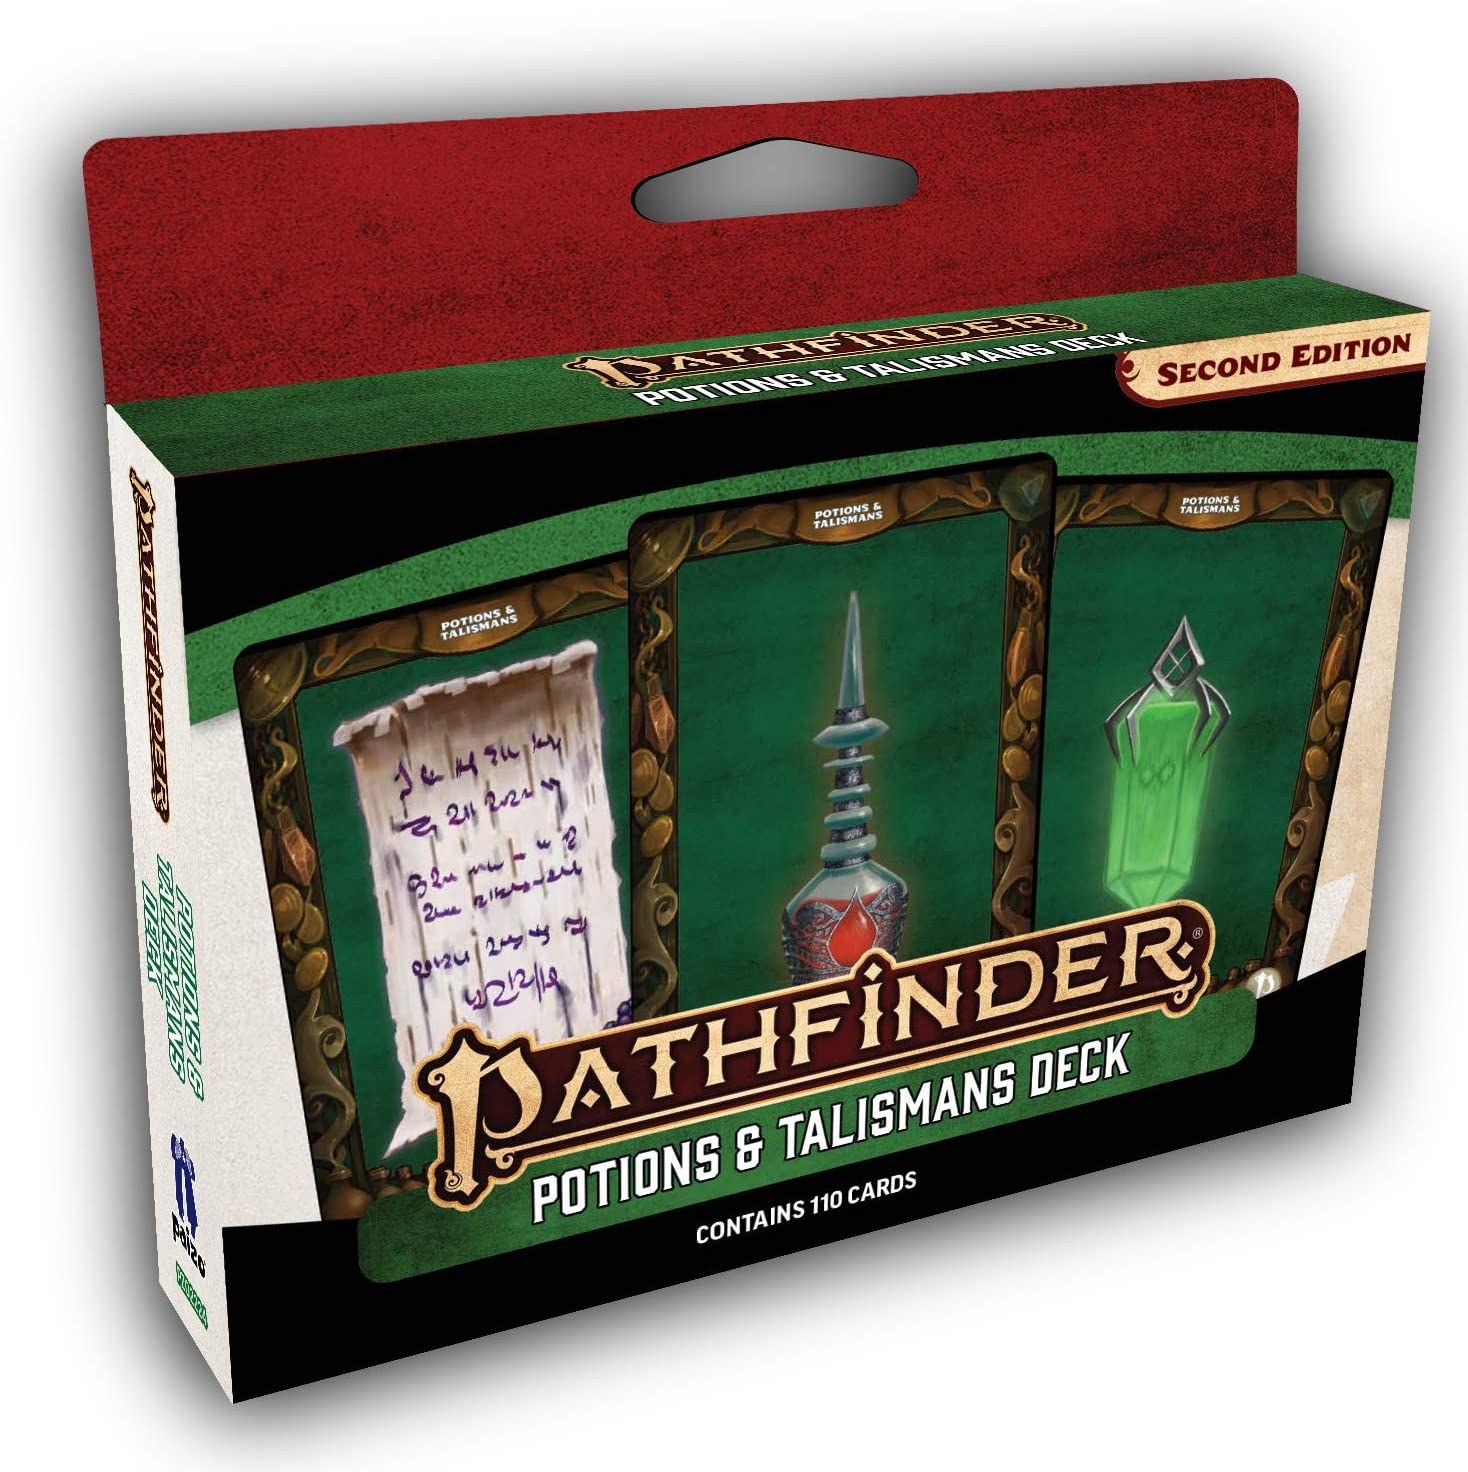 Pathfinder Potions & Talismans Deck | Gamer Loot